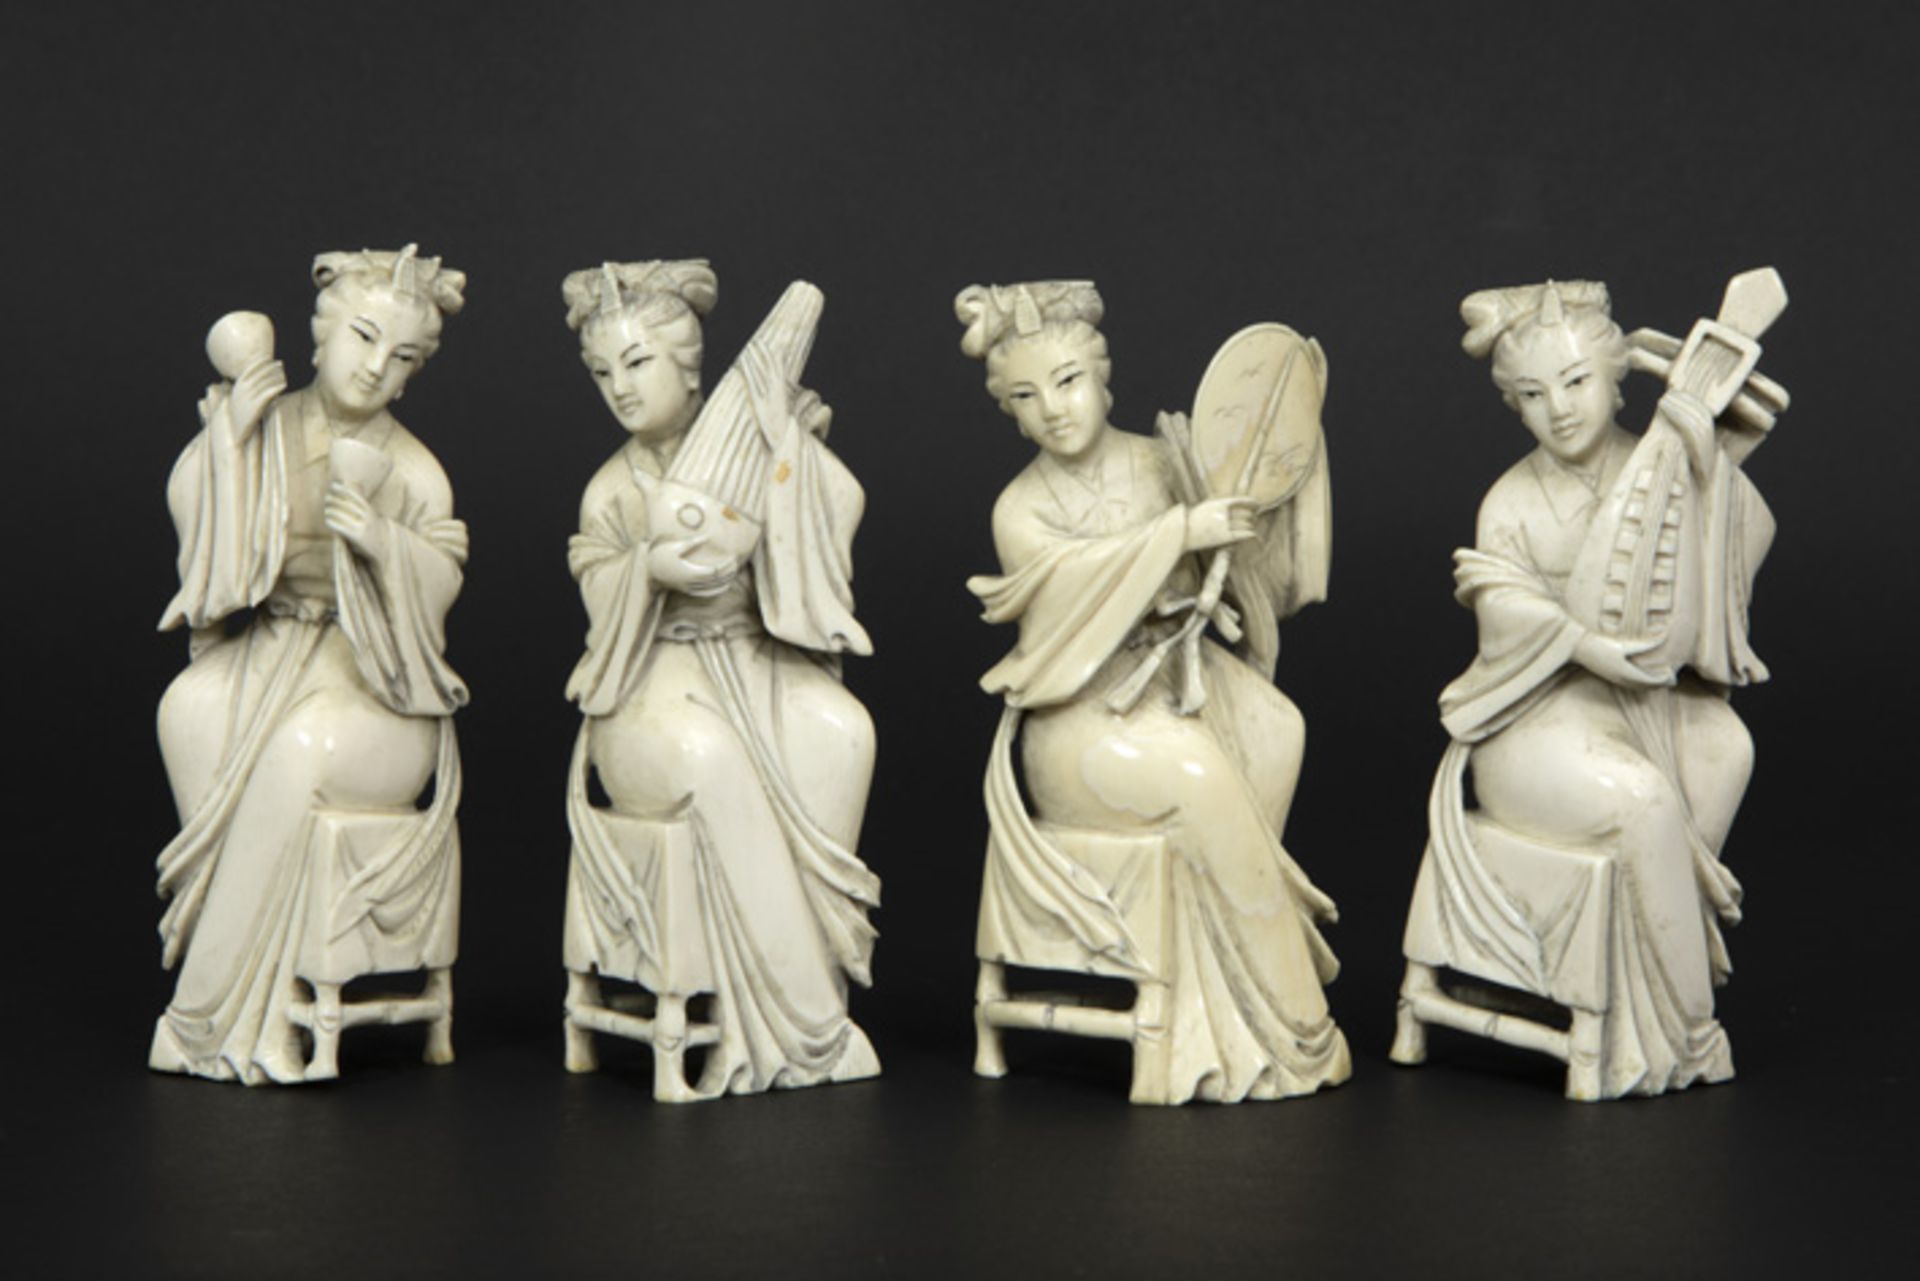 set of four small Chinese sculptures in ivory || Reeks van vier kleine Chinese sculpturen in ivoor :